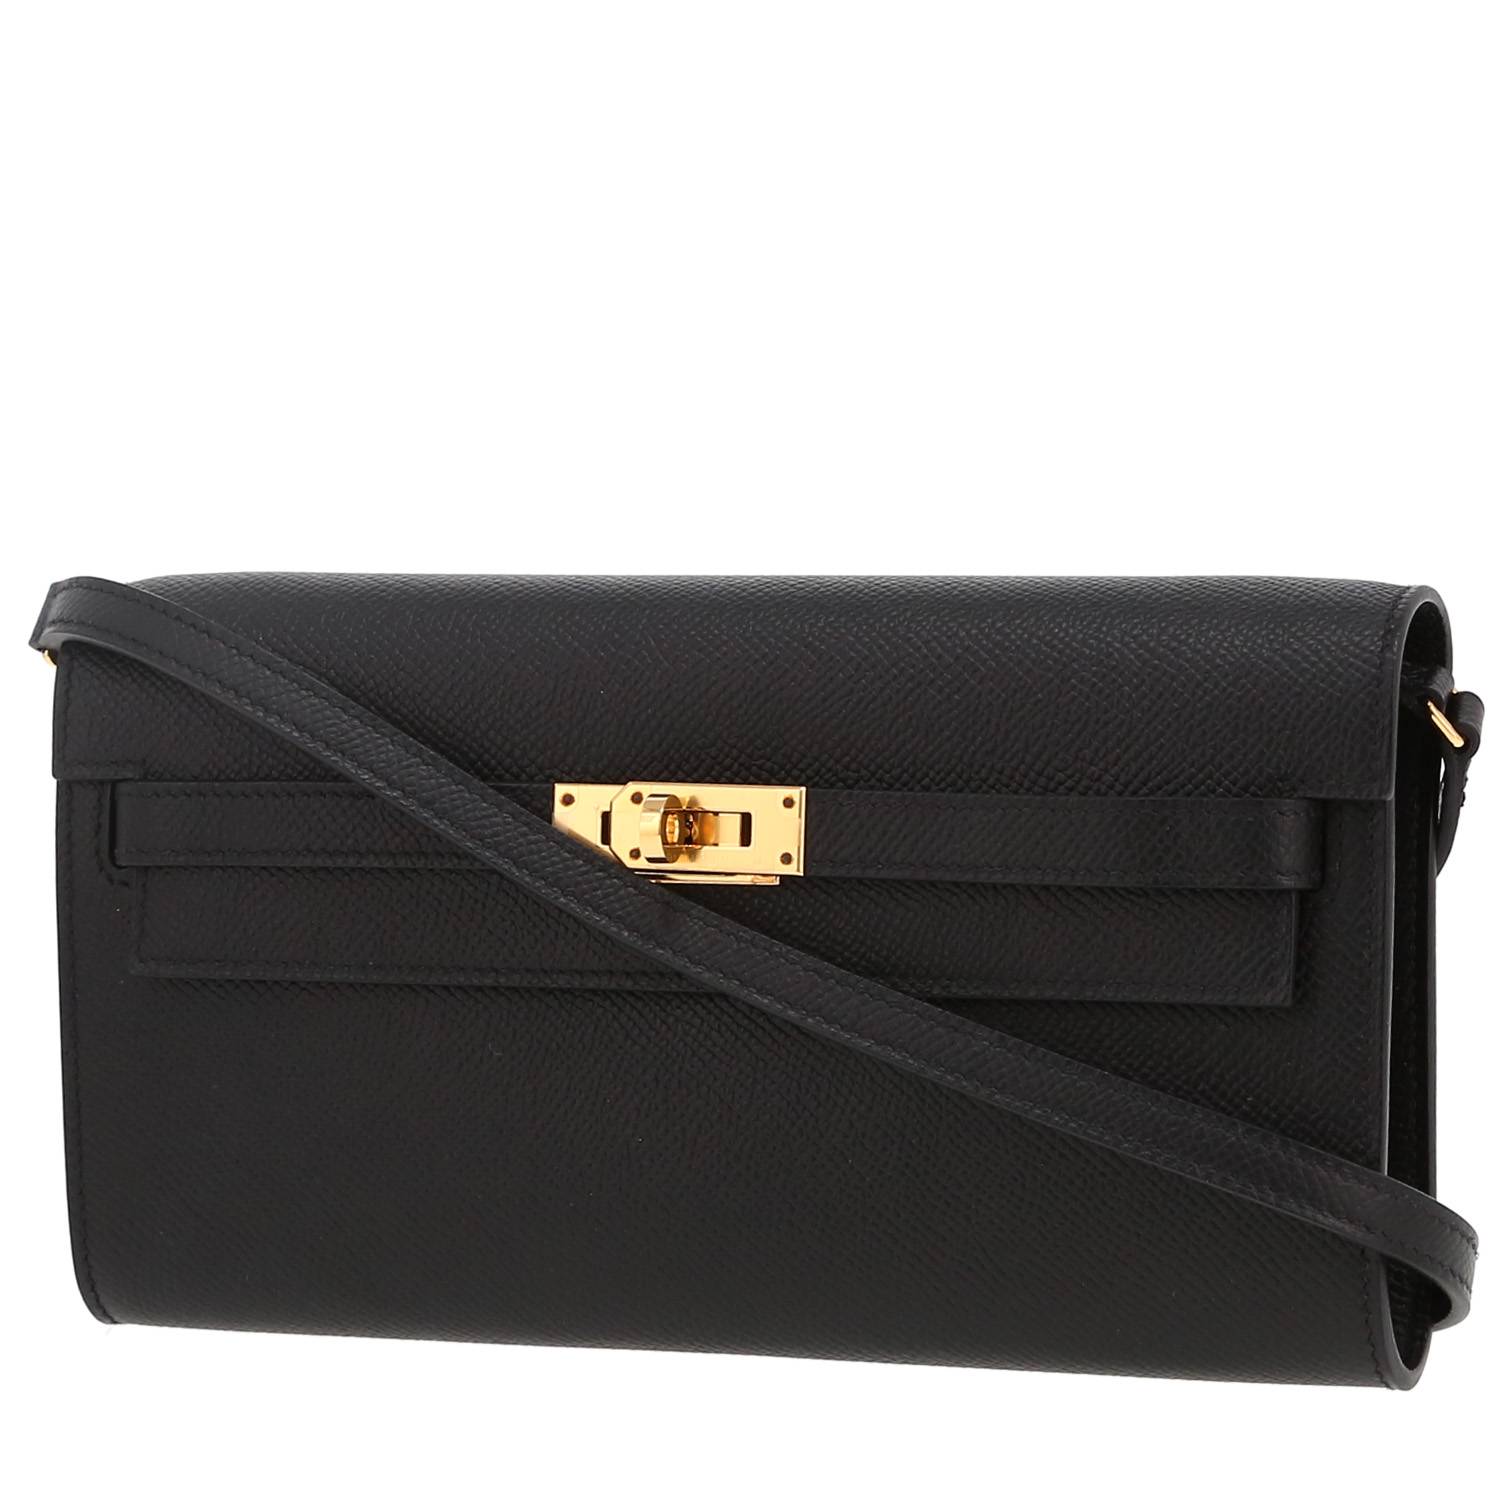 Kelly To Go Handbag/Clutch In Black Epsom Leather